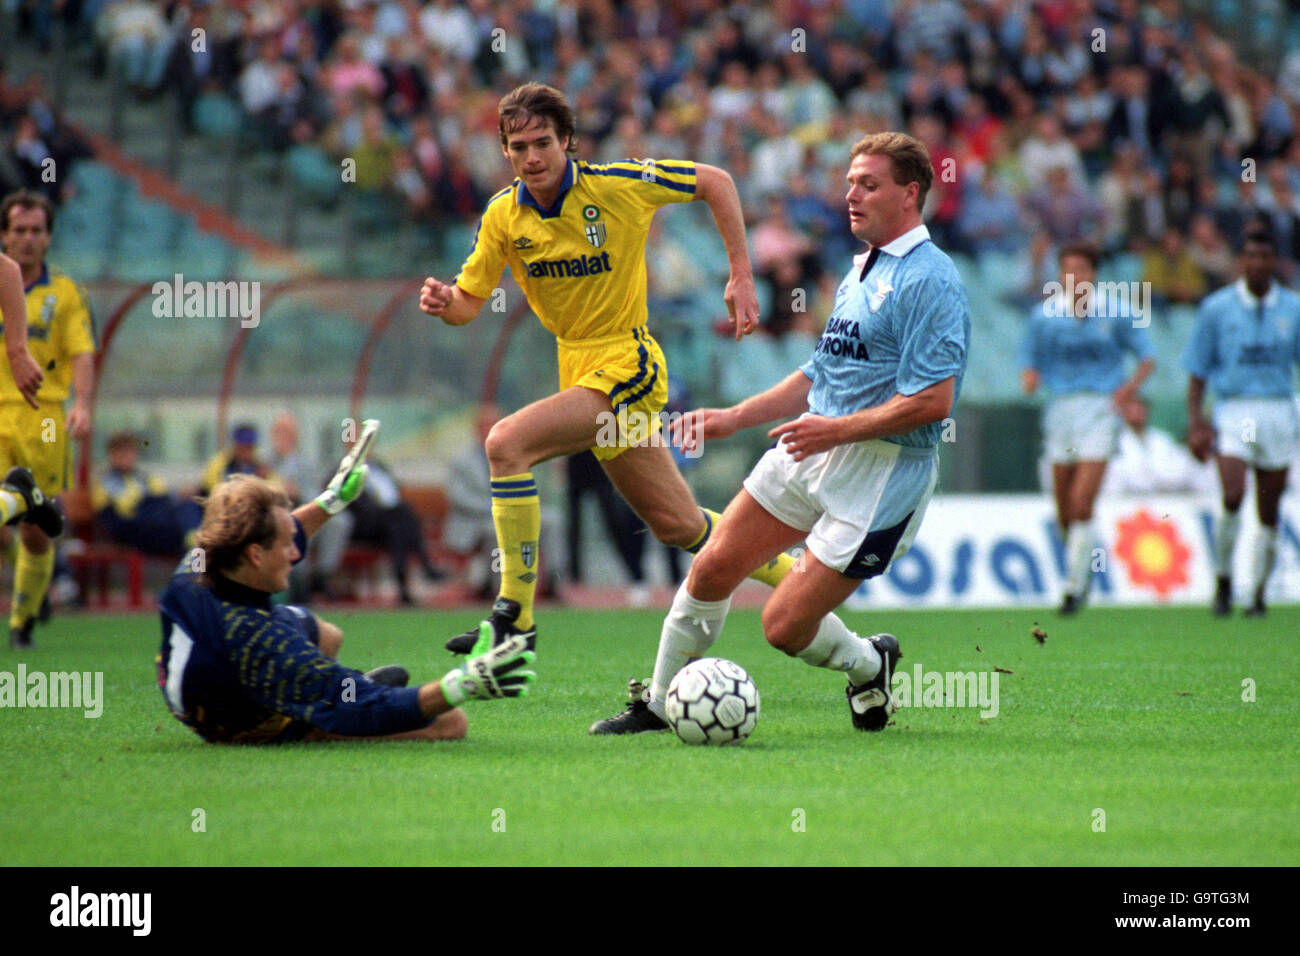 Soccer - Italian Serie A - Lazio v Parma. Lazio's Paul Gascoigne steams towards Parma's goalkeeper Claudio Taffarel Stock Photo